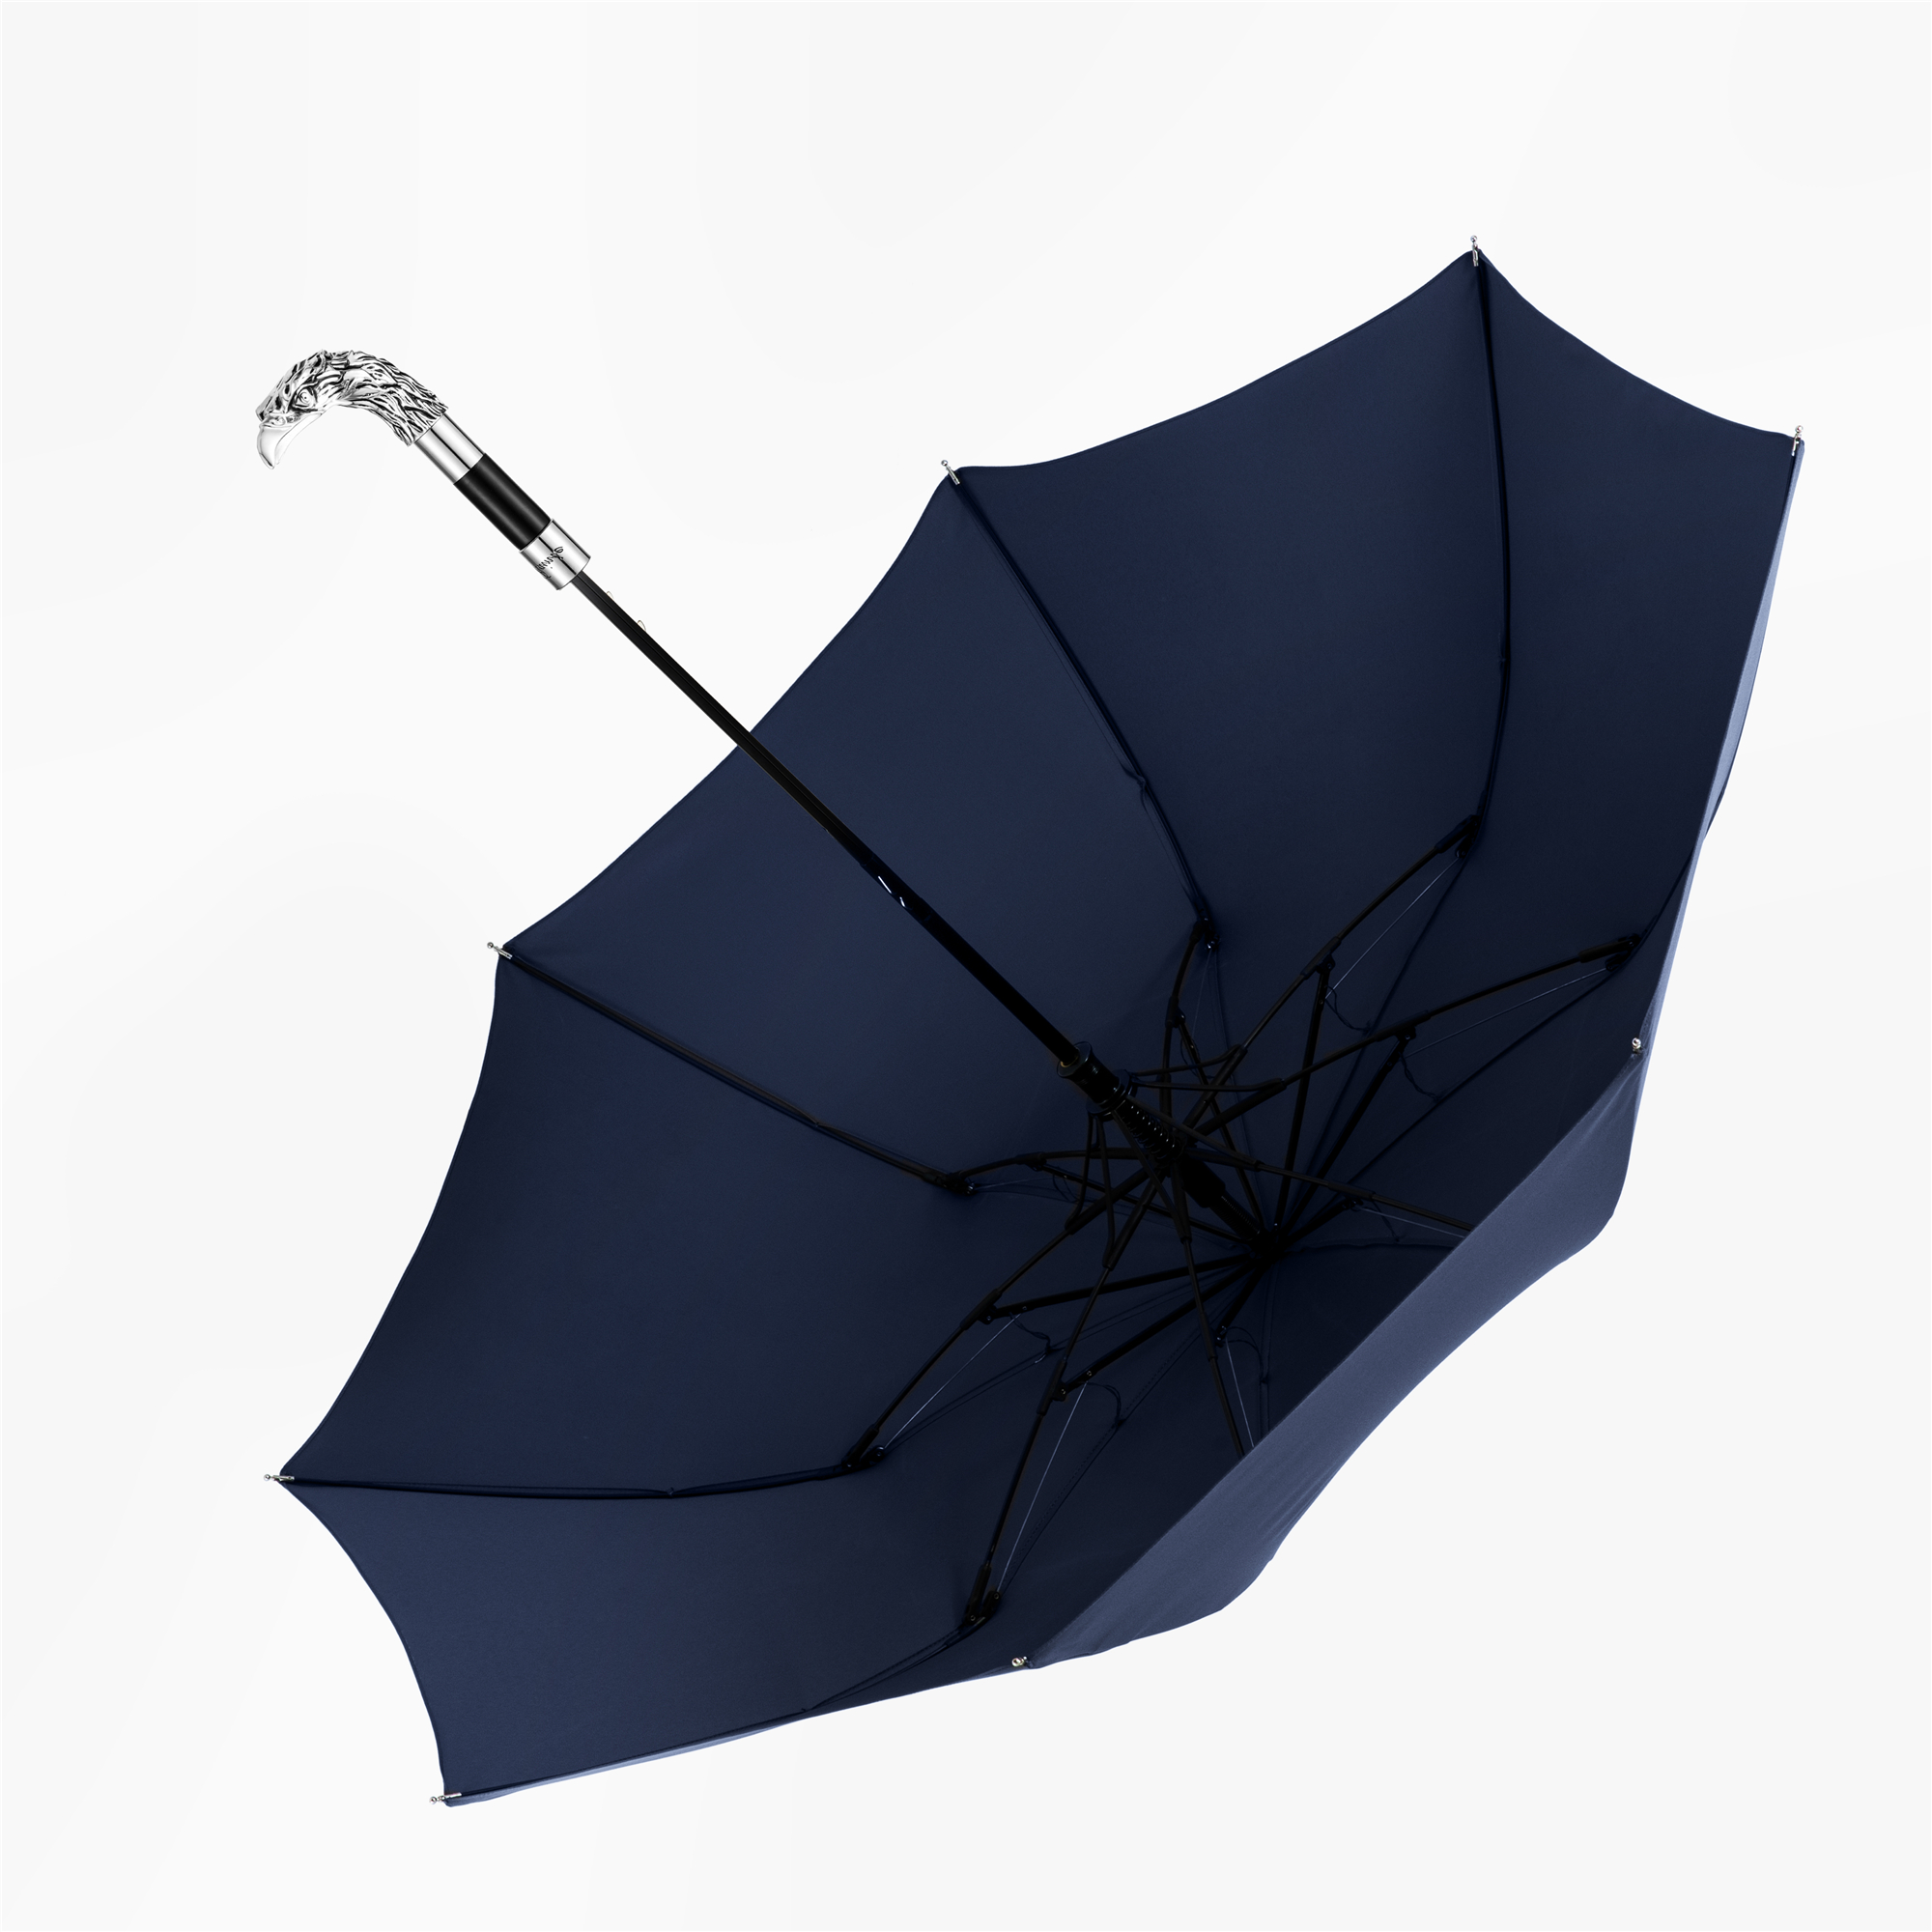 Two fold Goshawk Folding Umbrella